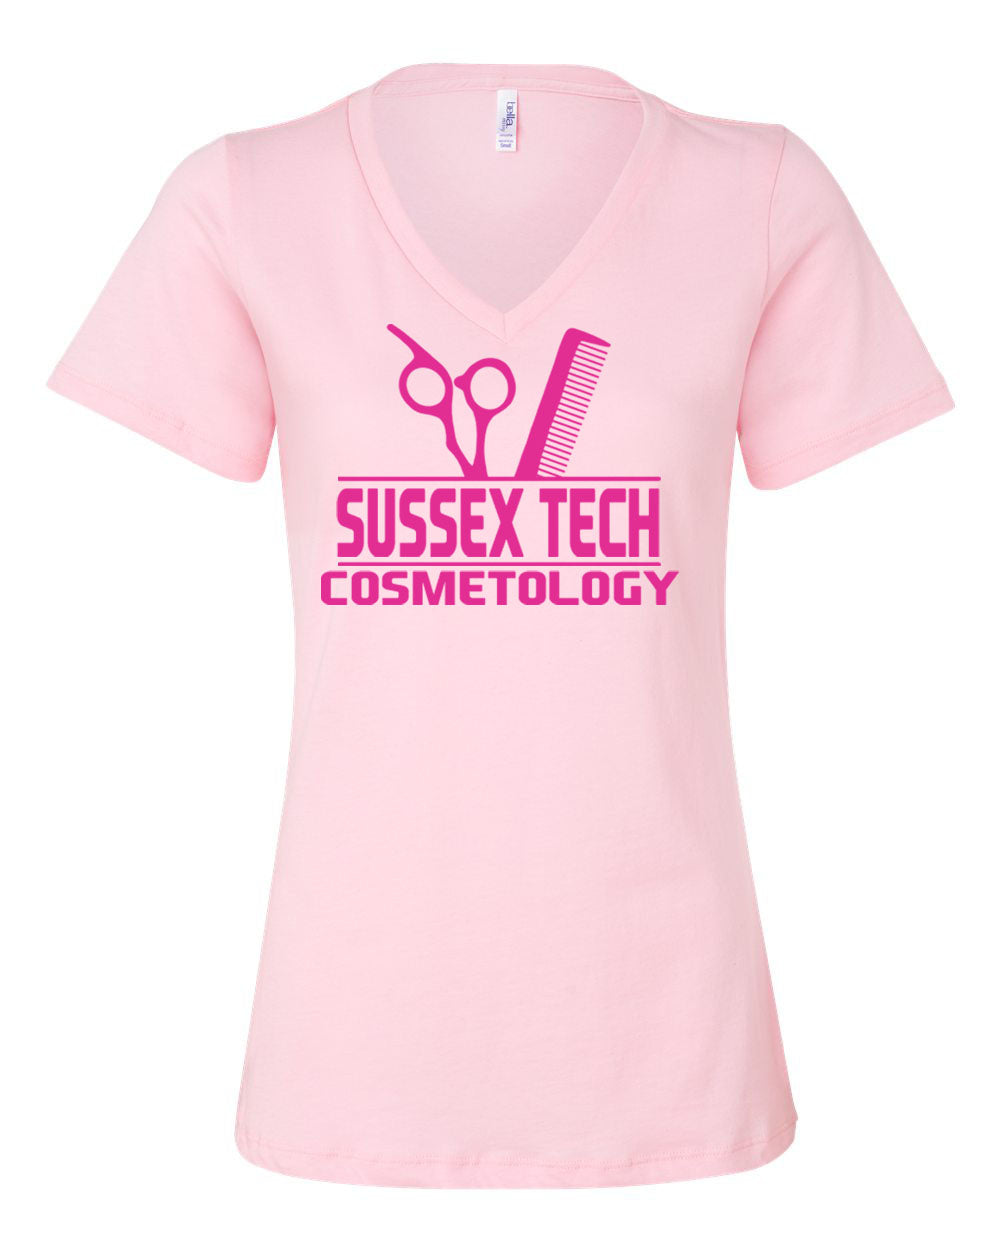 Sussex Tech Cosmetology Design 3 V-Neck